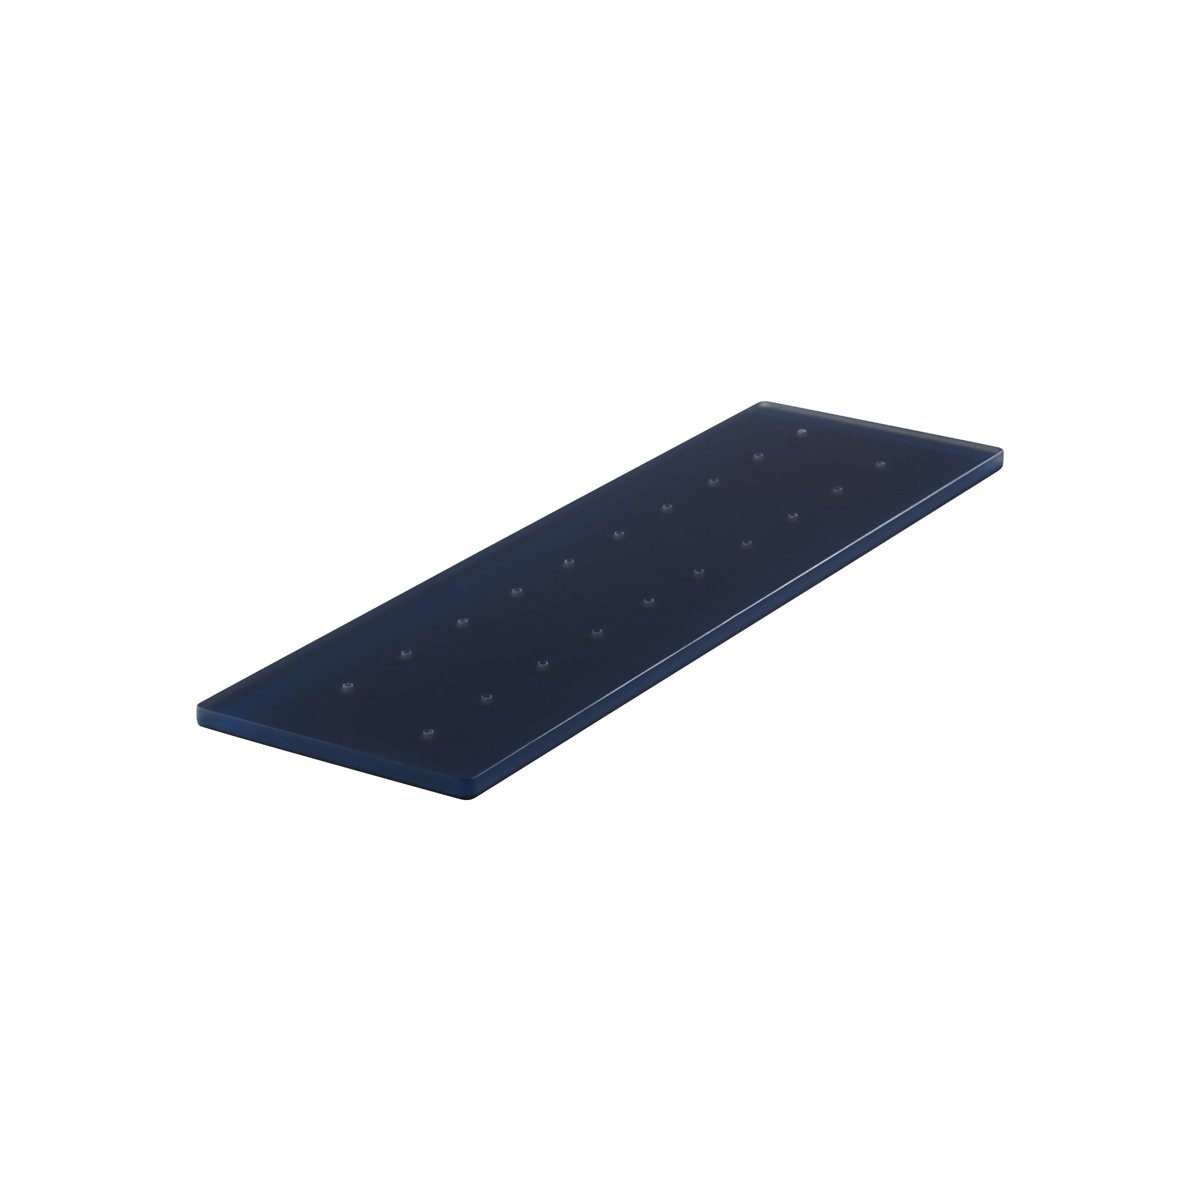 MLP118728 Mealplak Tray With 20 Holes Night Blue 495x150x10mm Tomkin Australia Hospitality Supplies